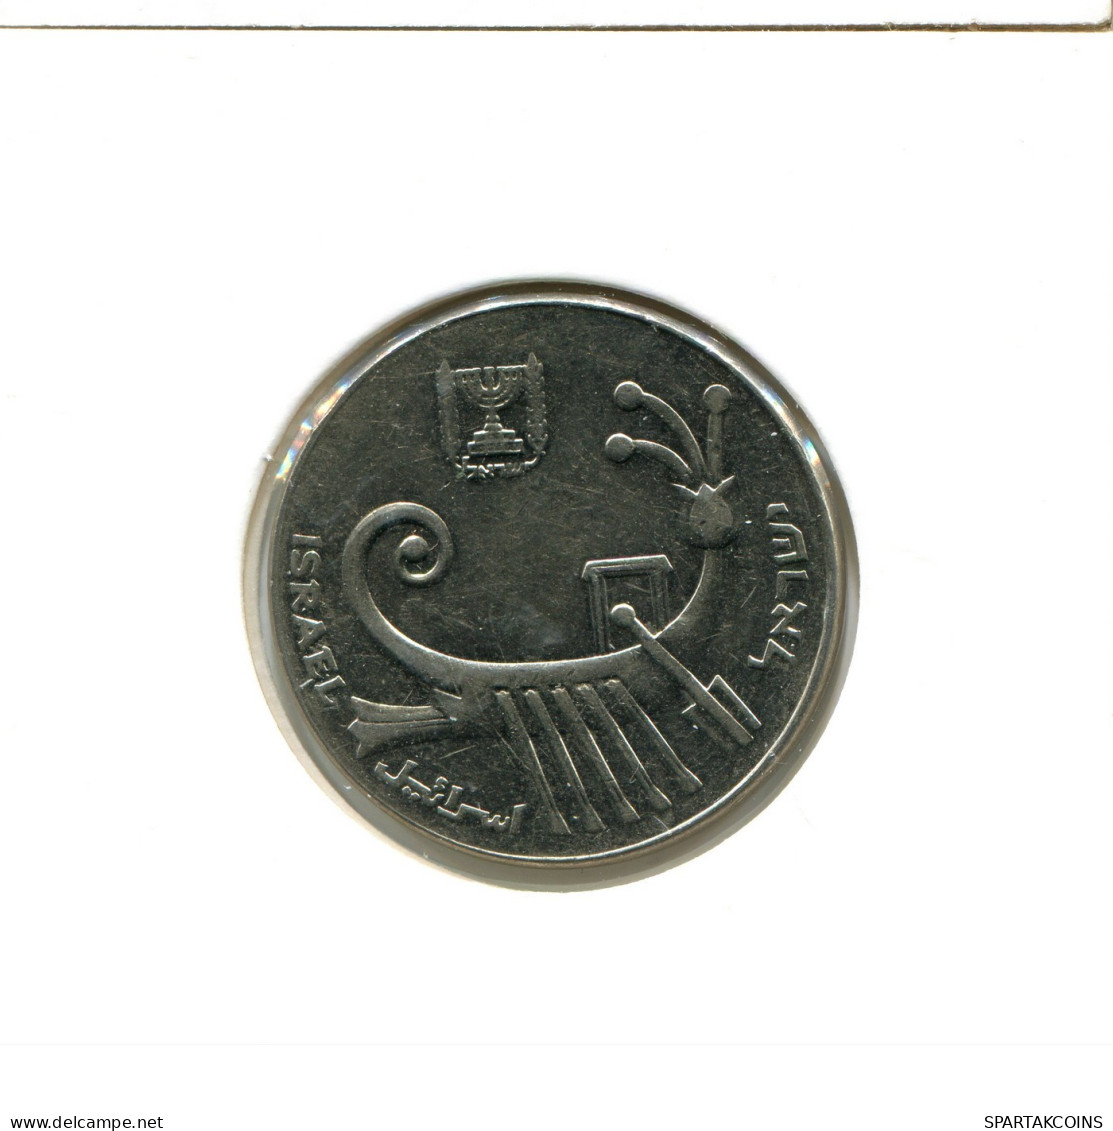 10 SHEQALIM 1984 ISRAEL Coin #AX822.U.A - Israel